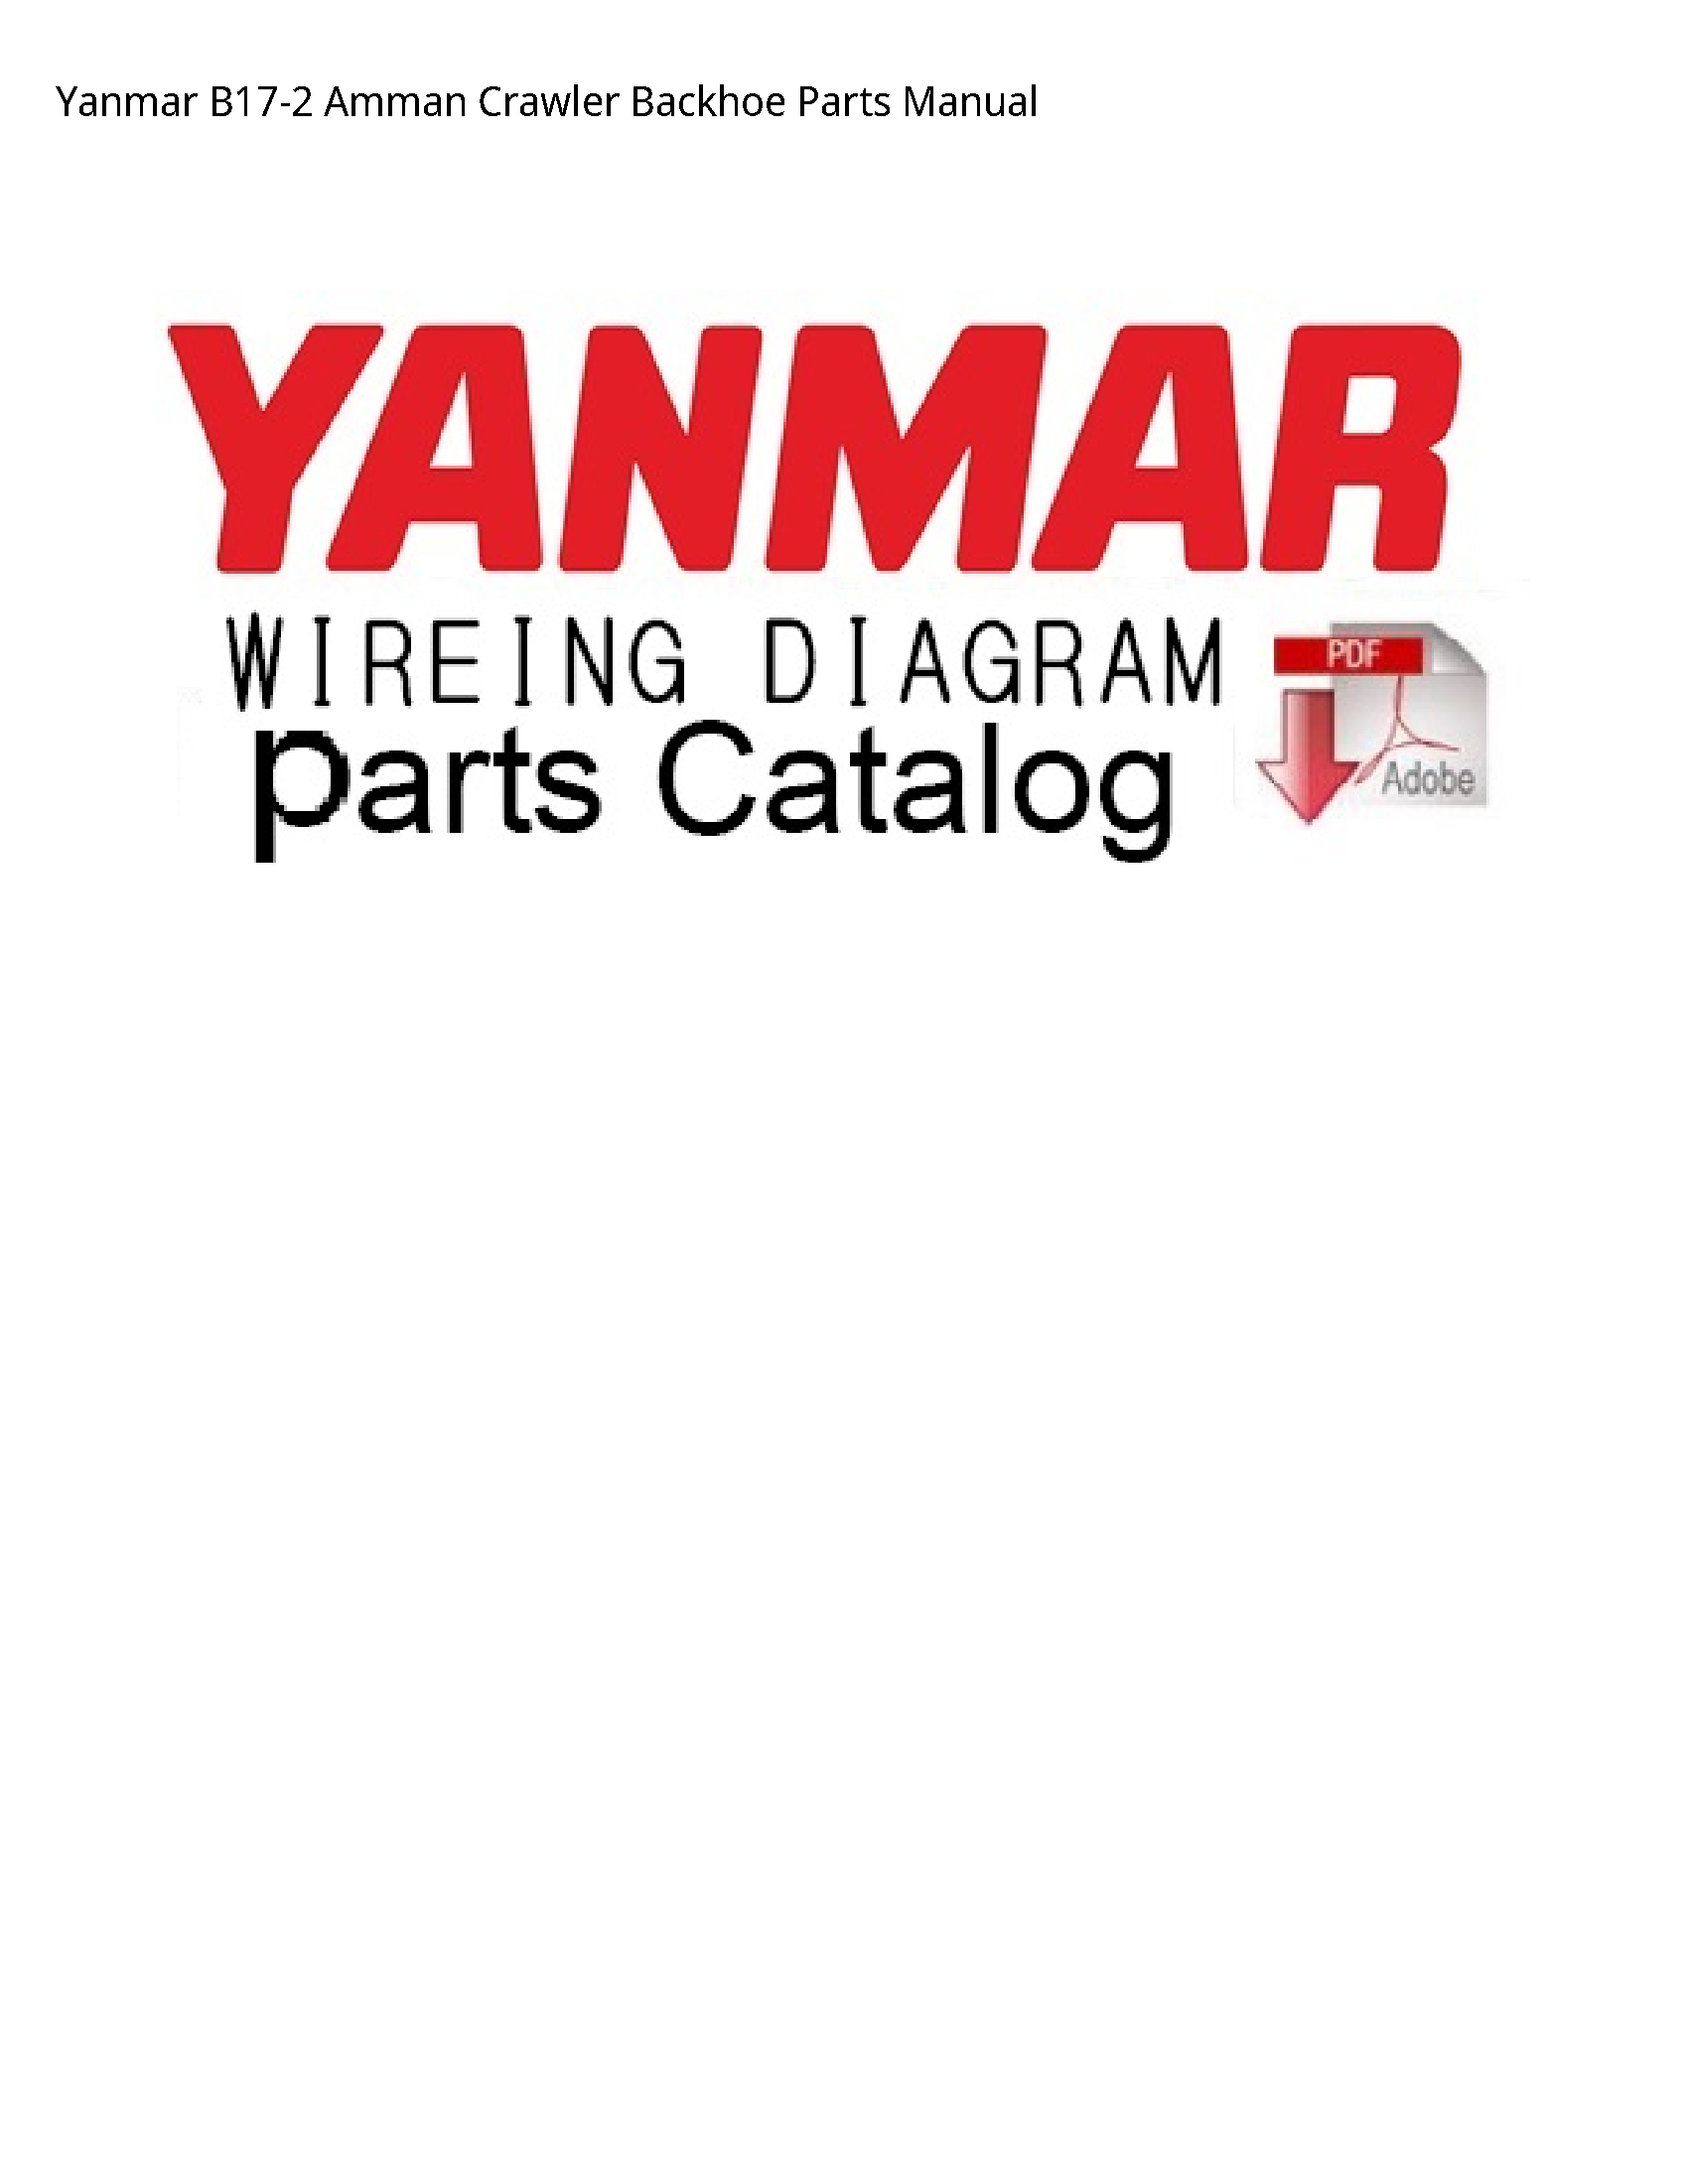 Yanmar B17-2 Amman Crawler Backhoe Parts manual